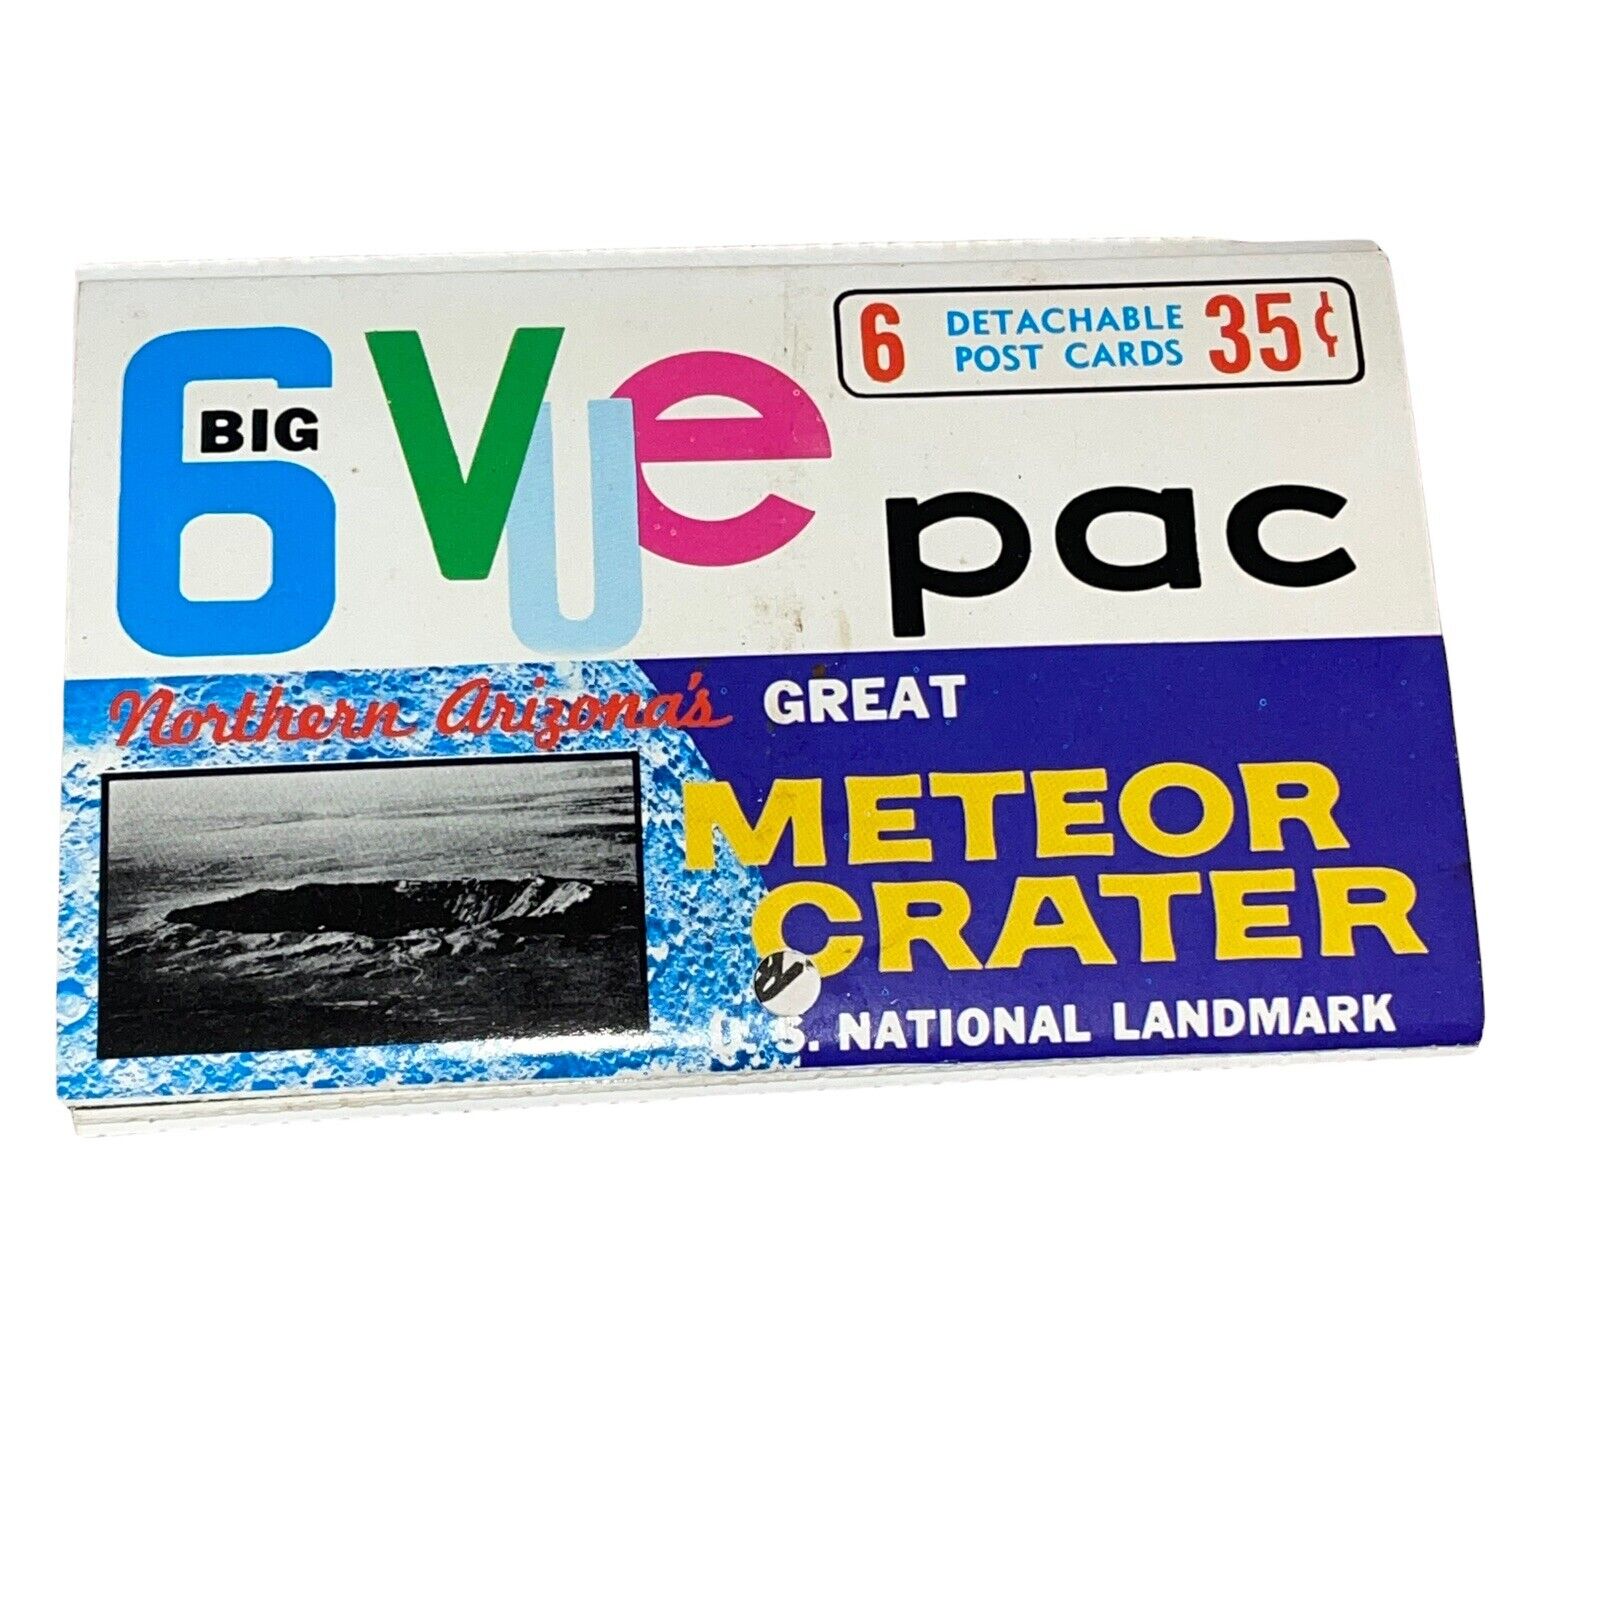 Big 6 Vue Pac Northern Arizonas Great Meteor Crater 6 Detachable Post Cards